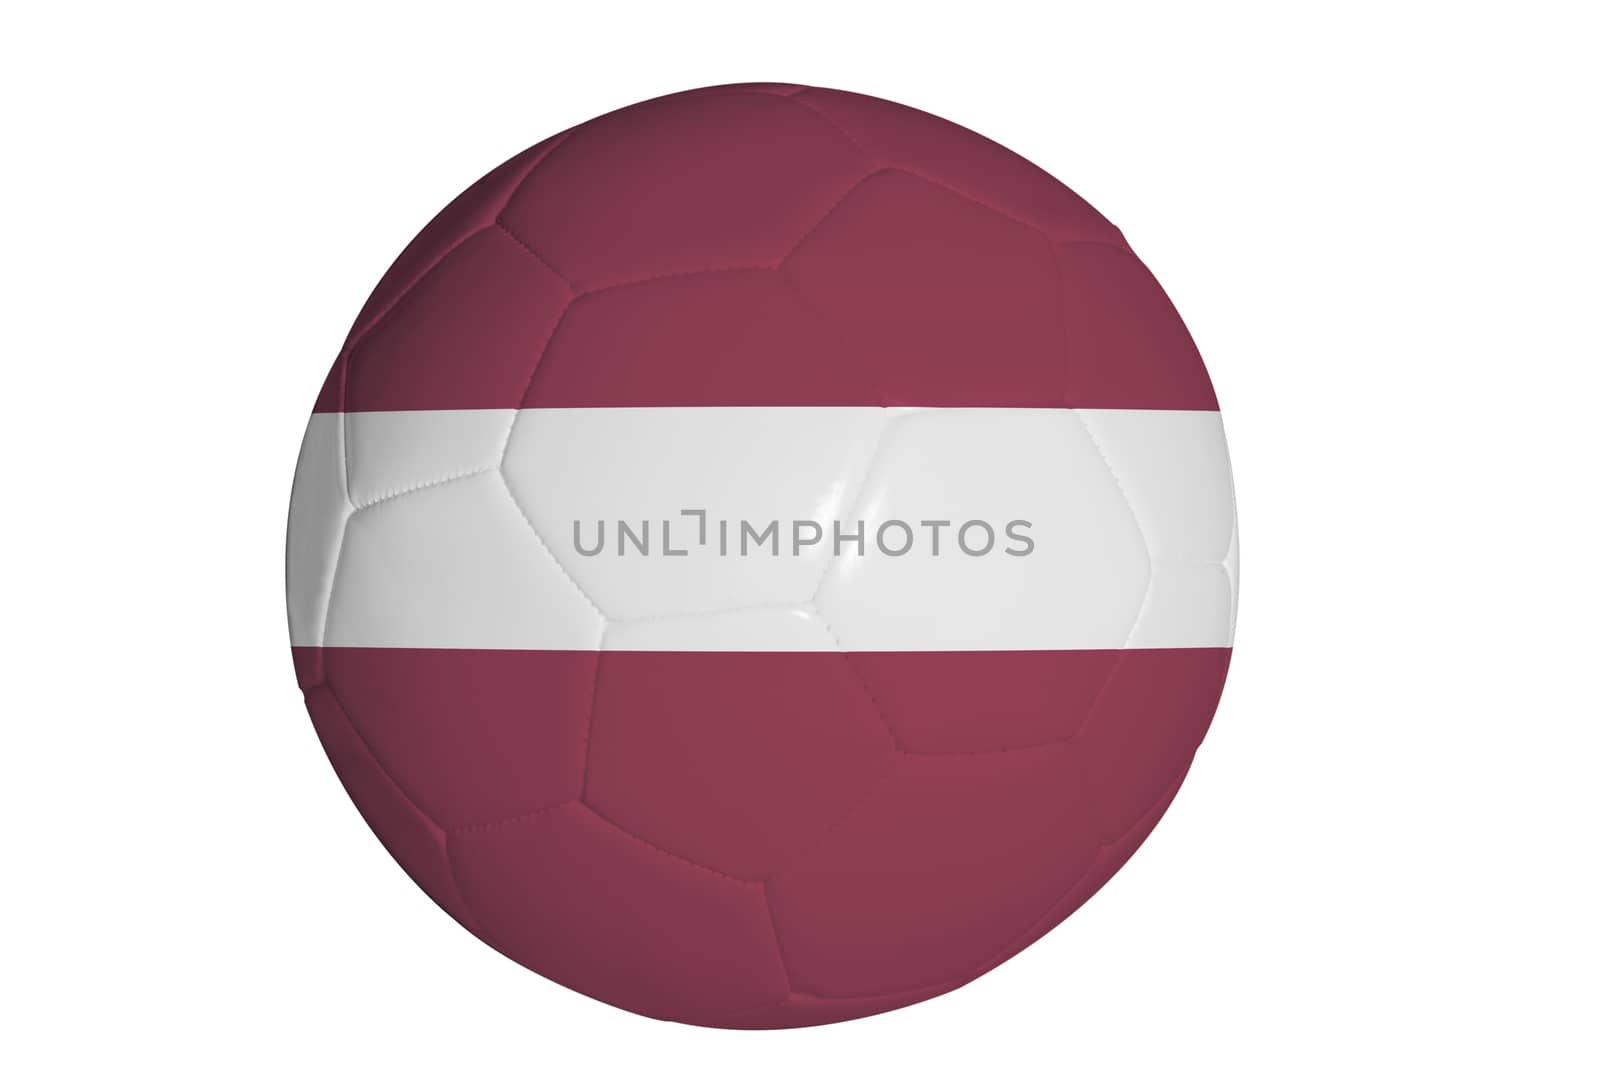 Latvian flag graphic on soccer ball